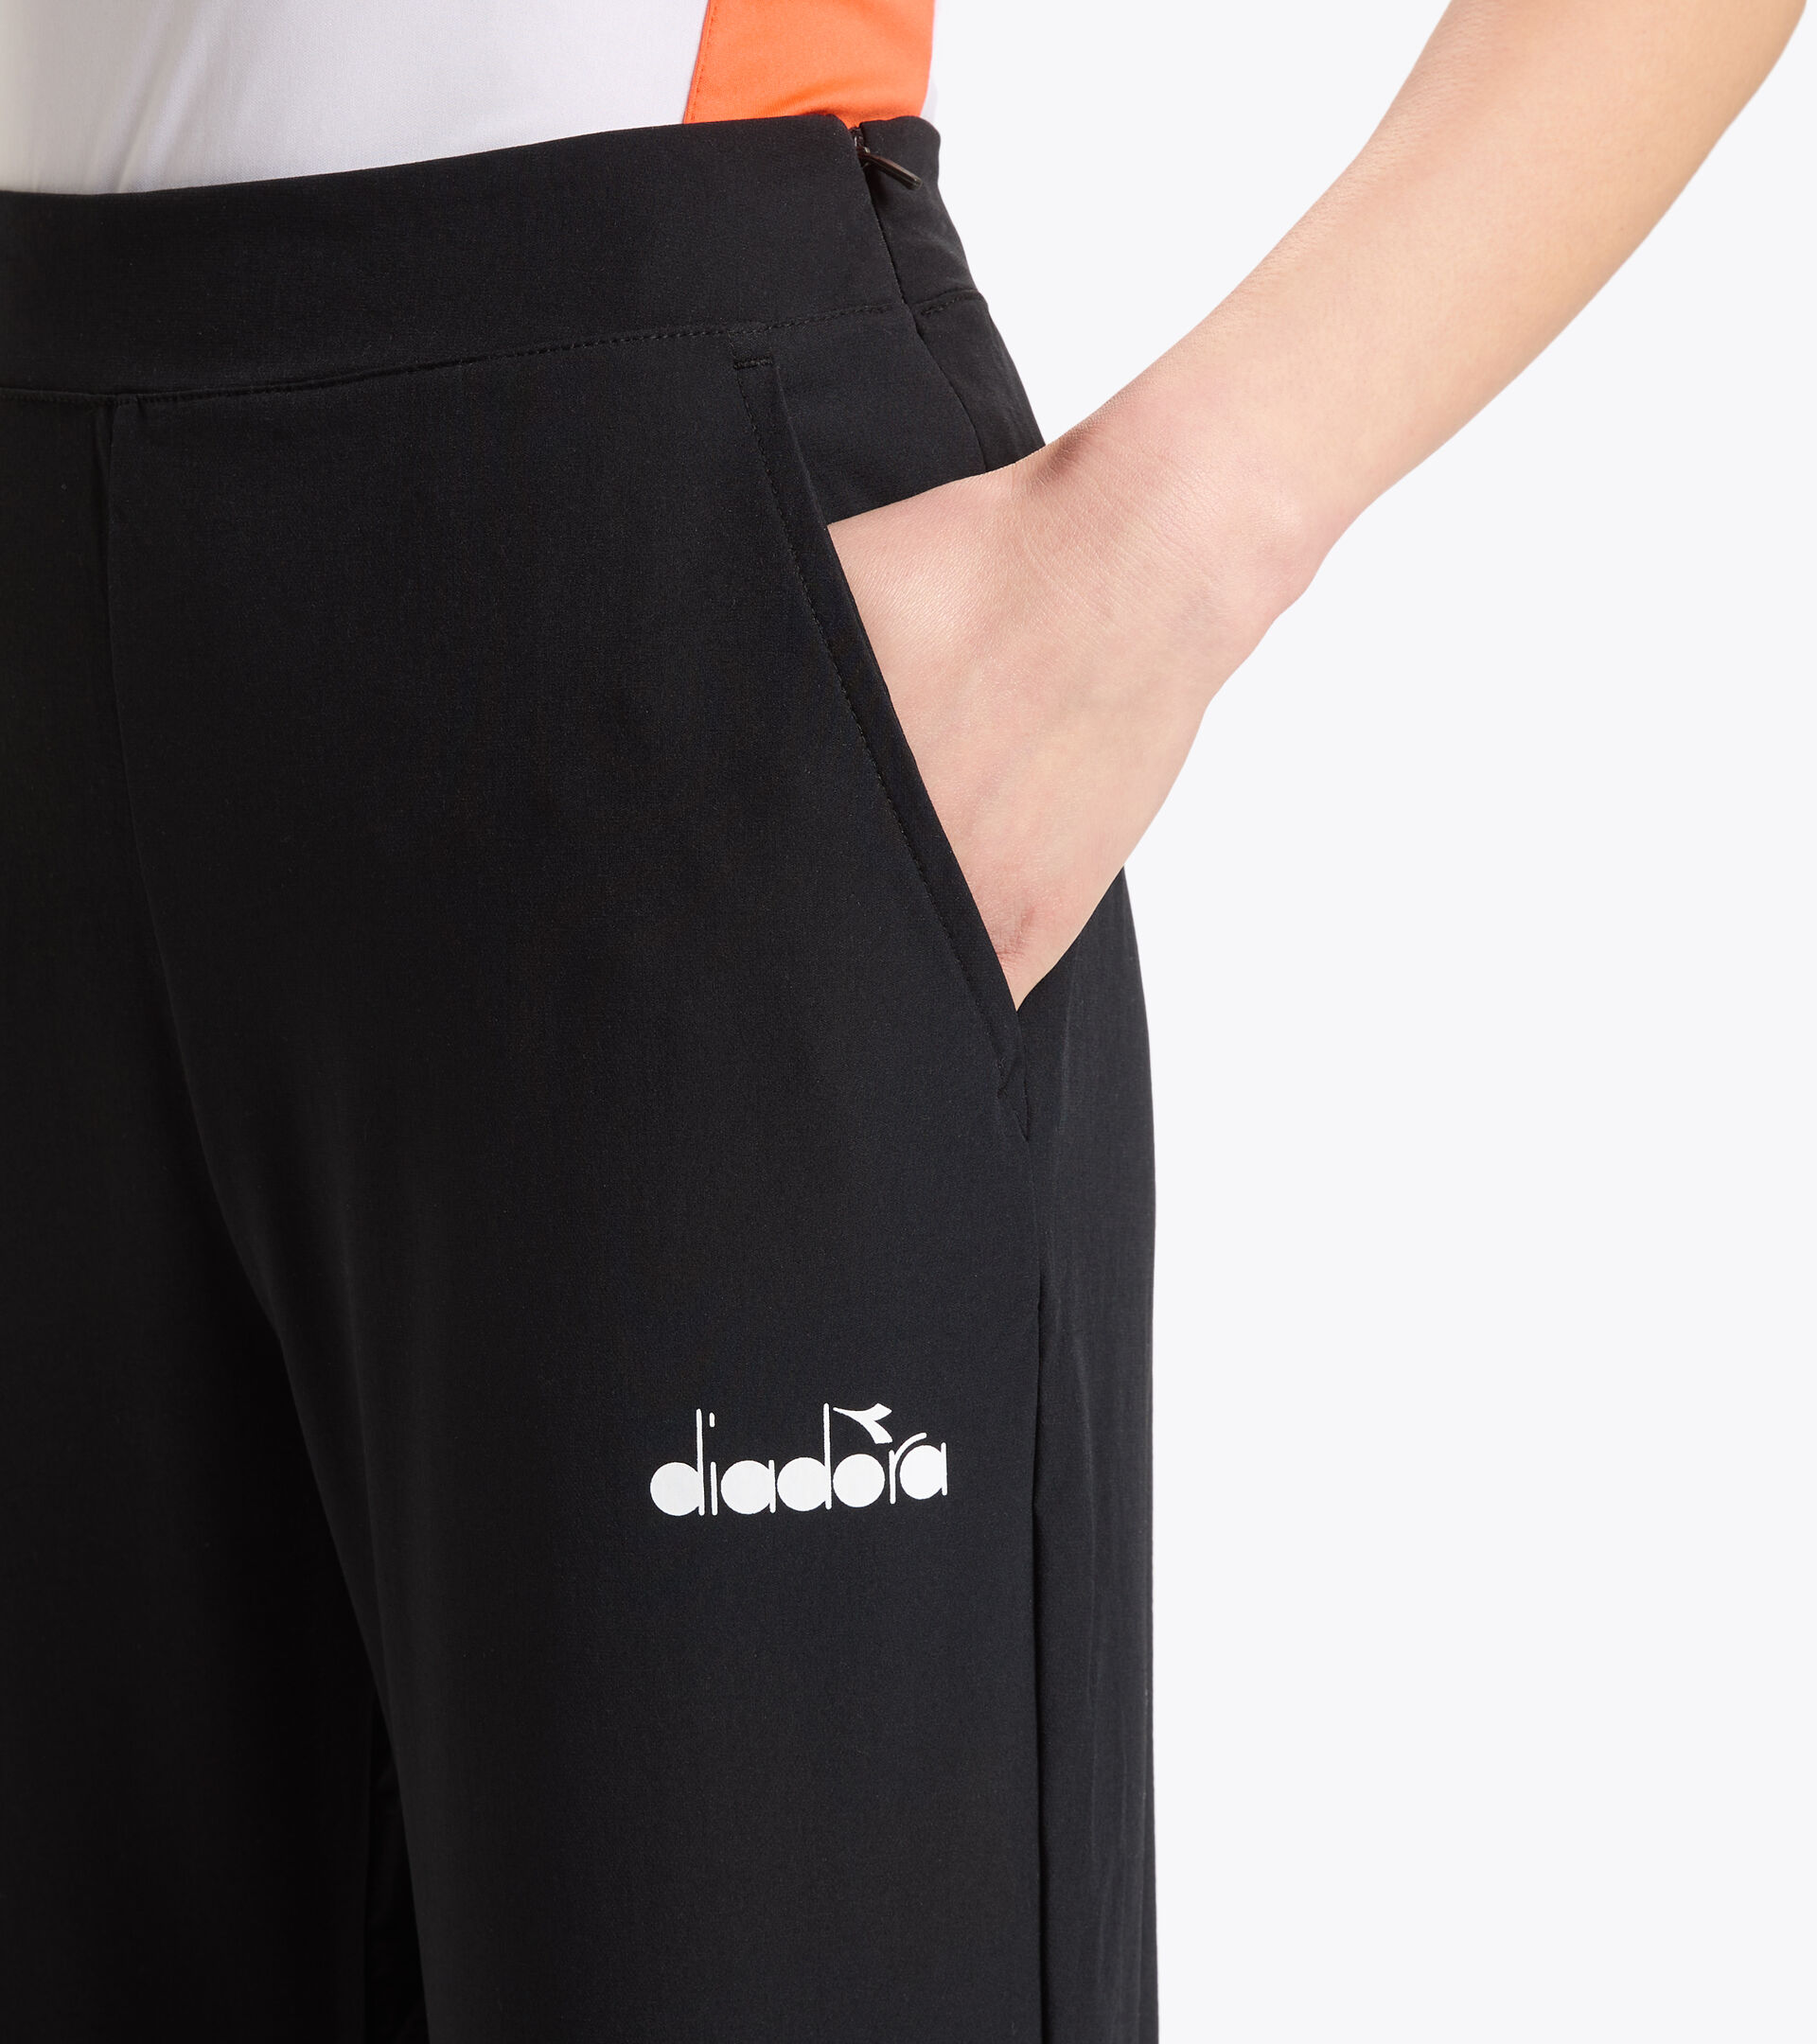 L. PANTS Tennis trousers - Women - Diadora Online Store JP